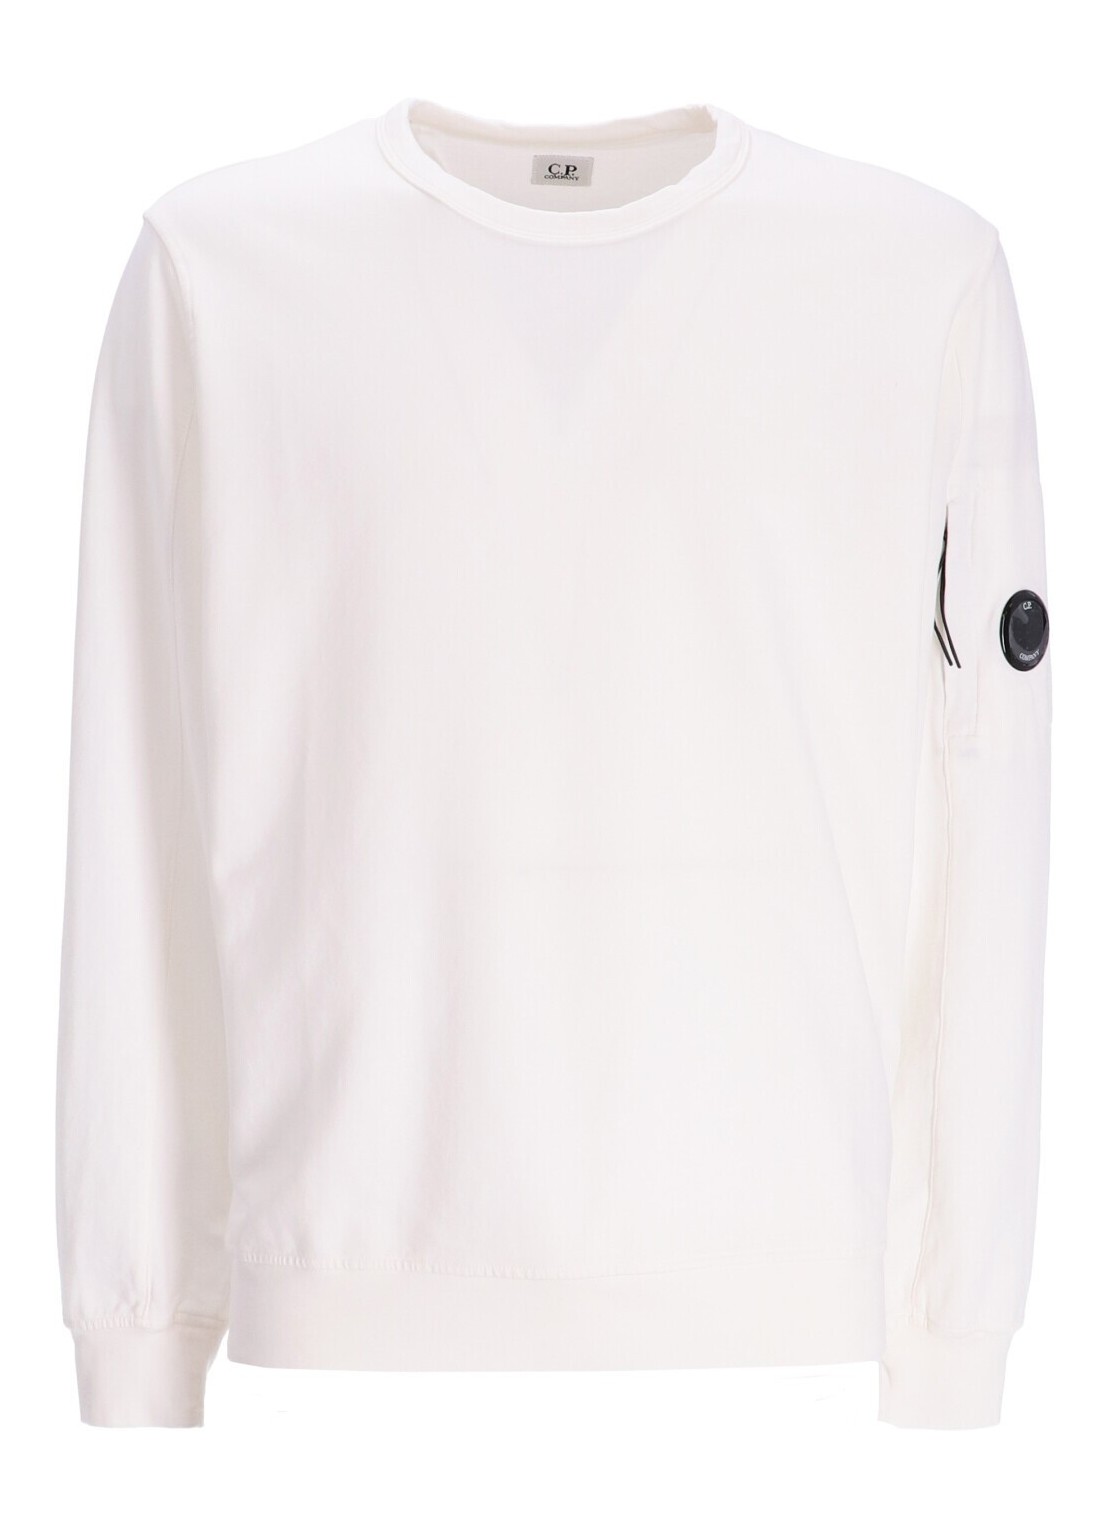 Sudadera c.p.company sweater man light fleece lens sweatshirt 15cmss032a002246g 103 talla M
 